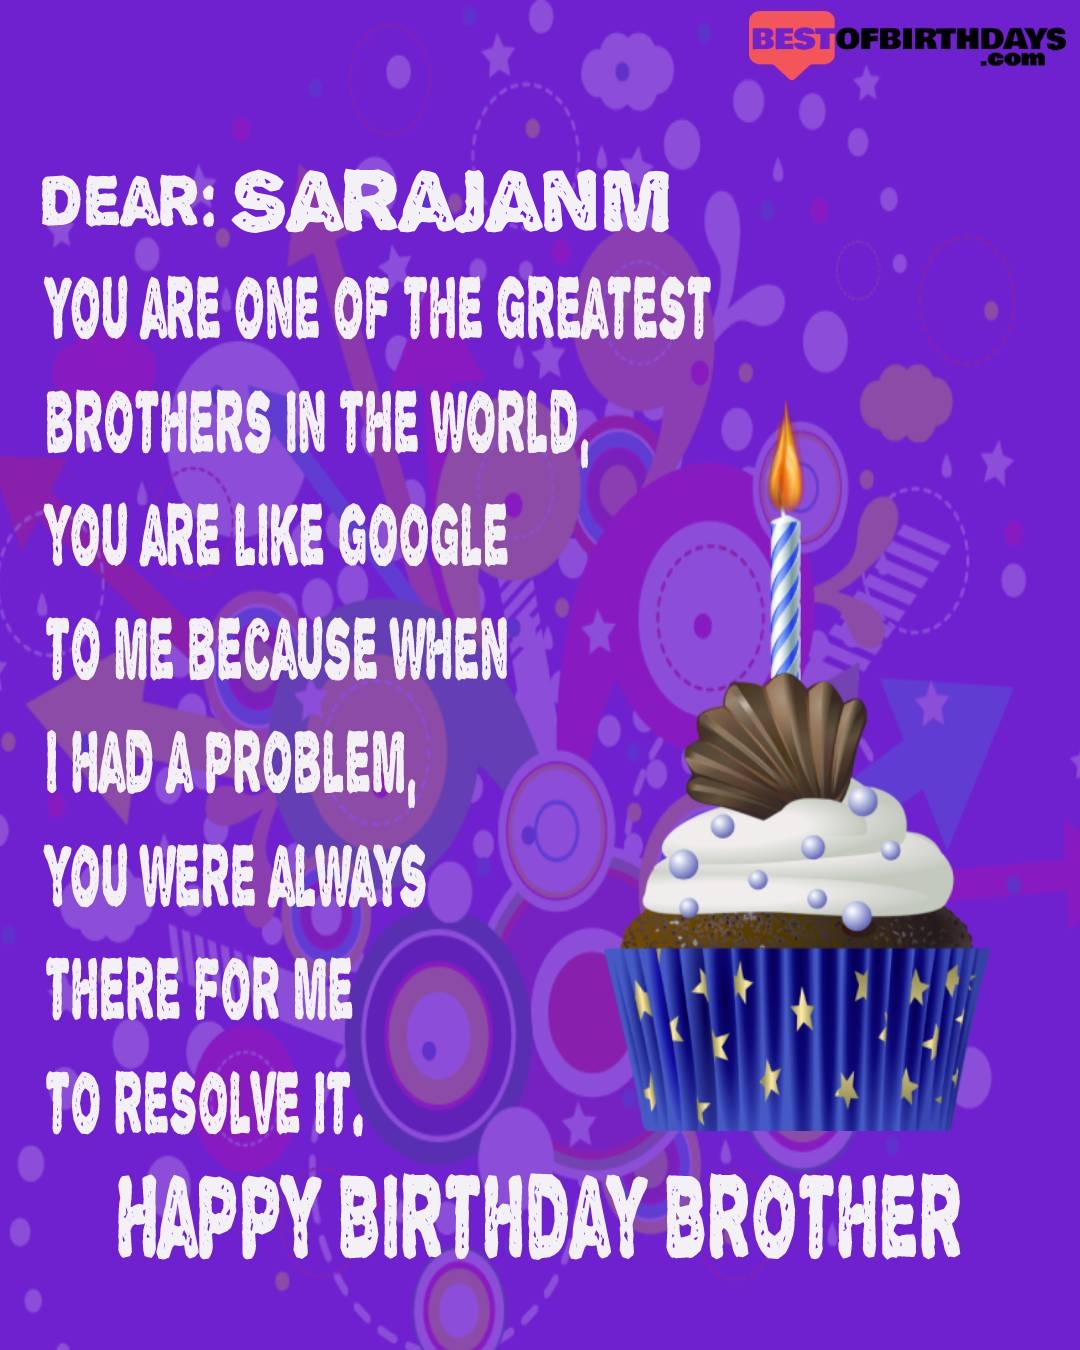 Happy birthday sarajanm bhai brother bro